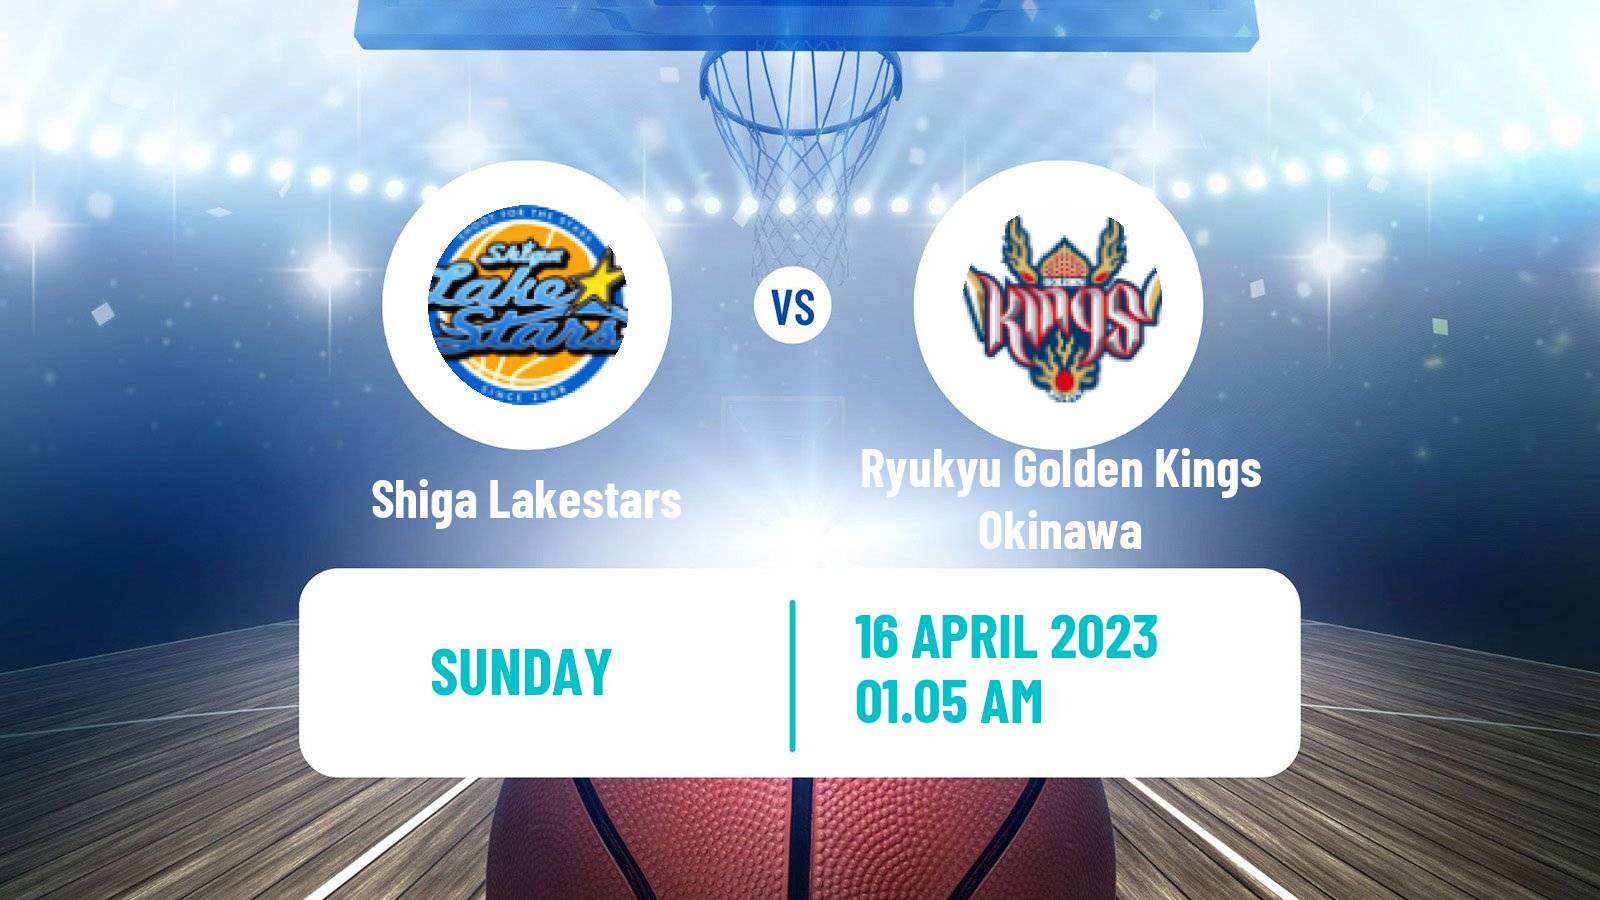 Basketball BJ League Shiga Lakestars - Ryukyu Golden Kings Okinawa